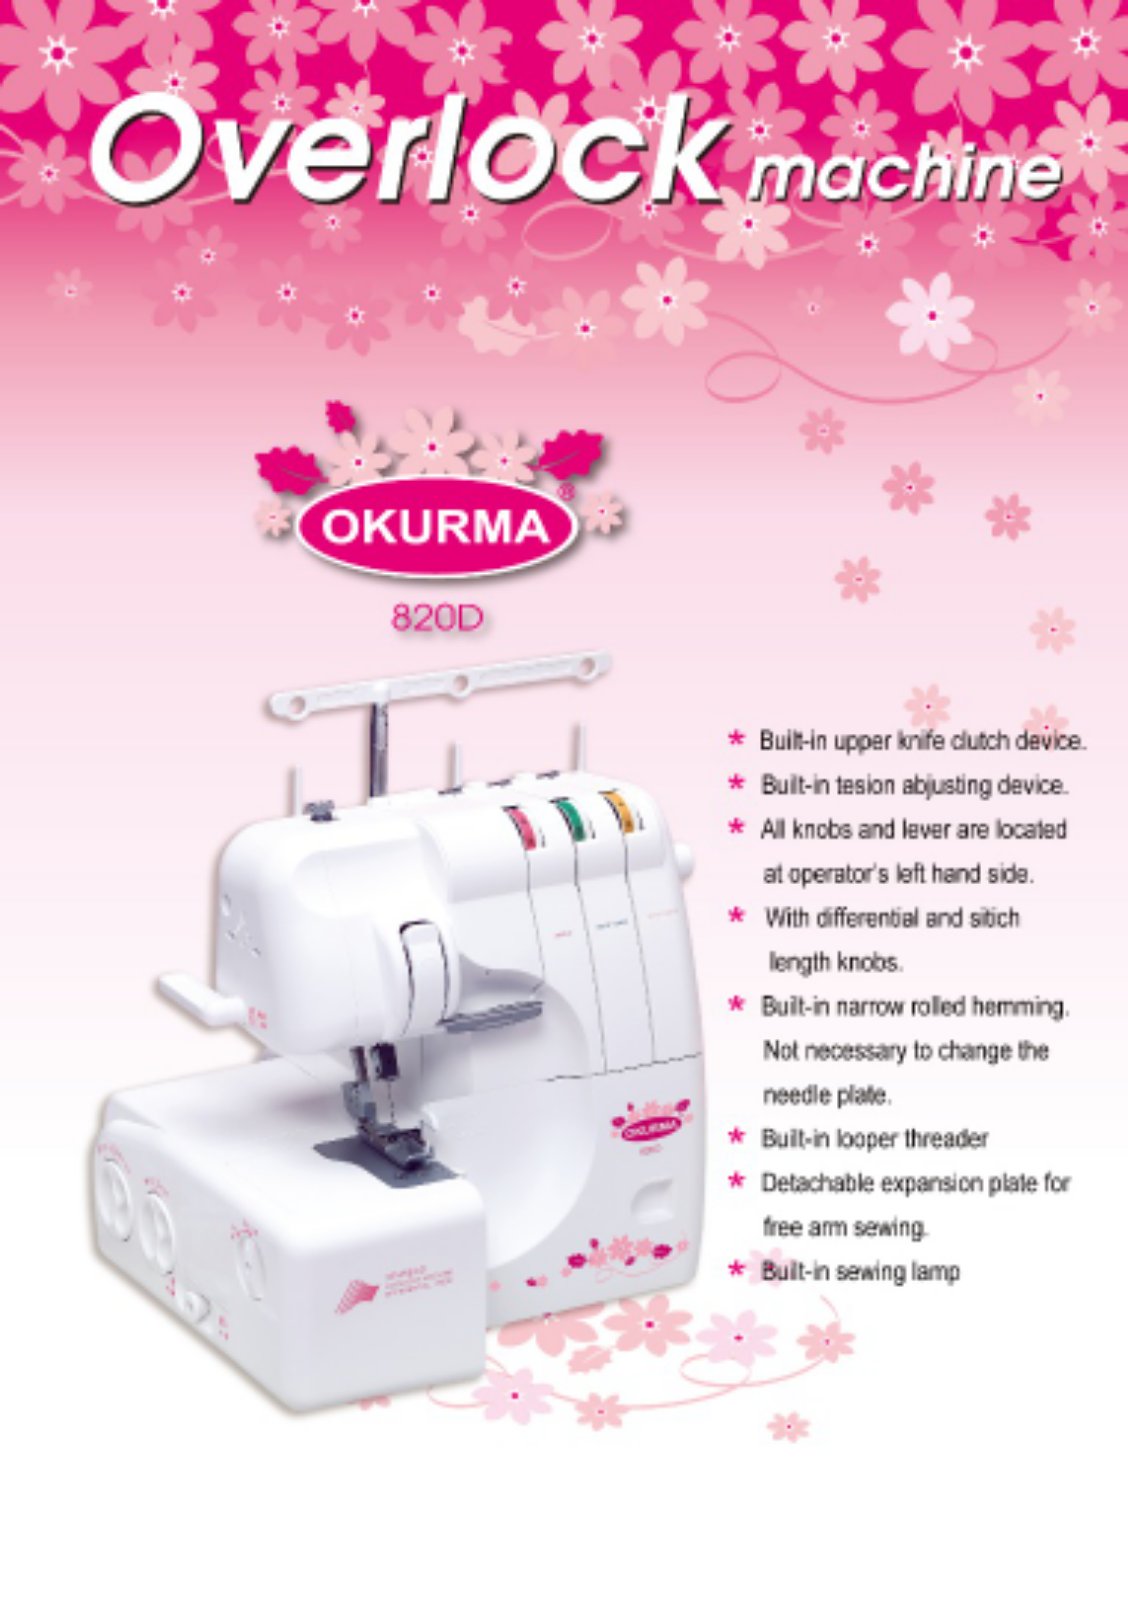 Okurma Portable Overlock Sewing machine